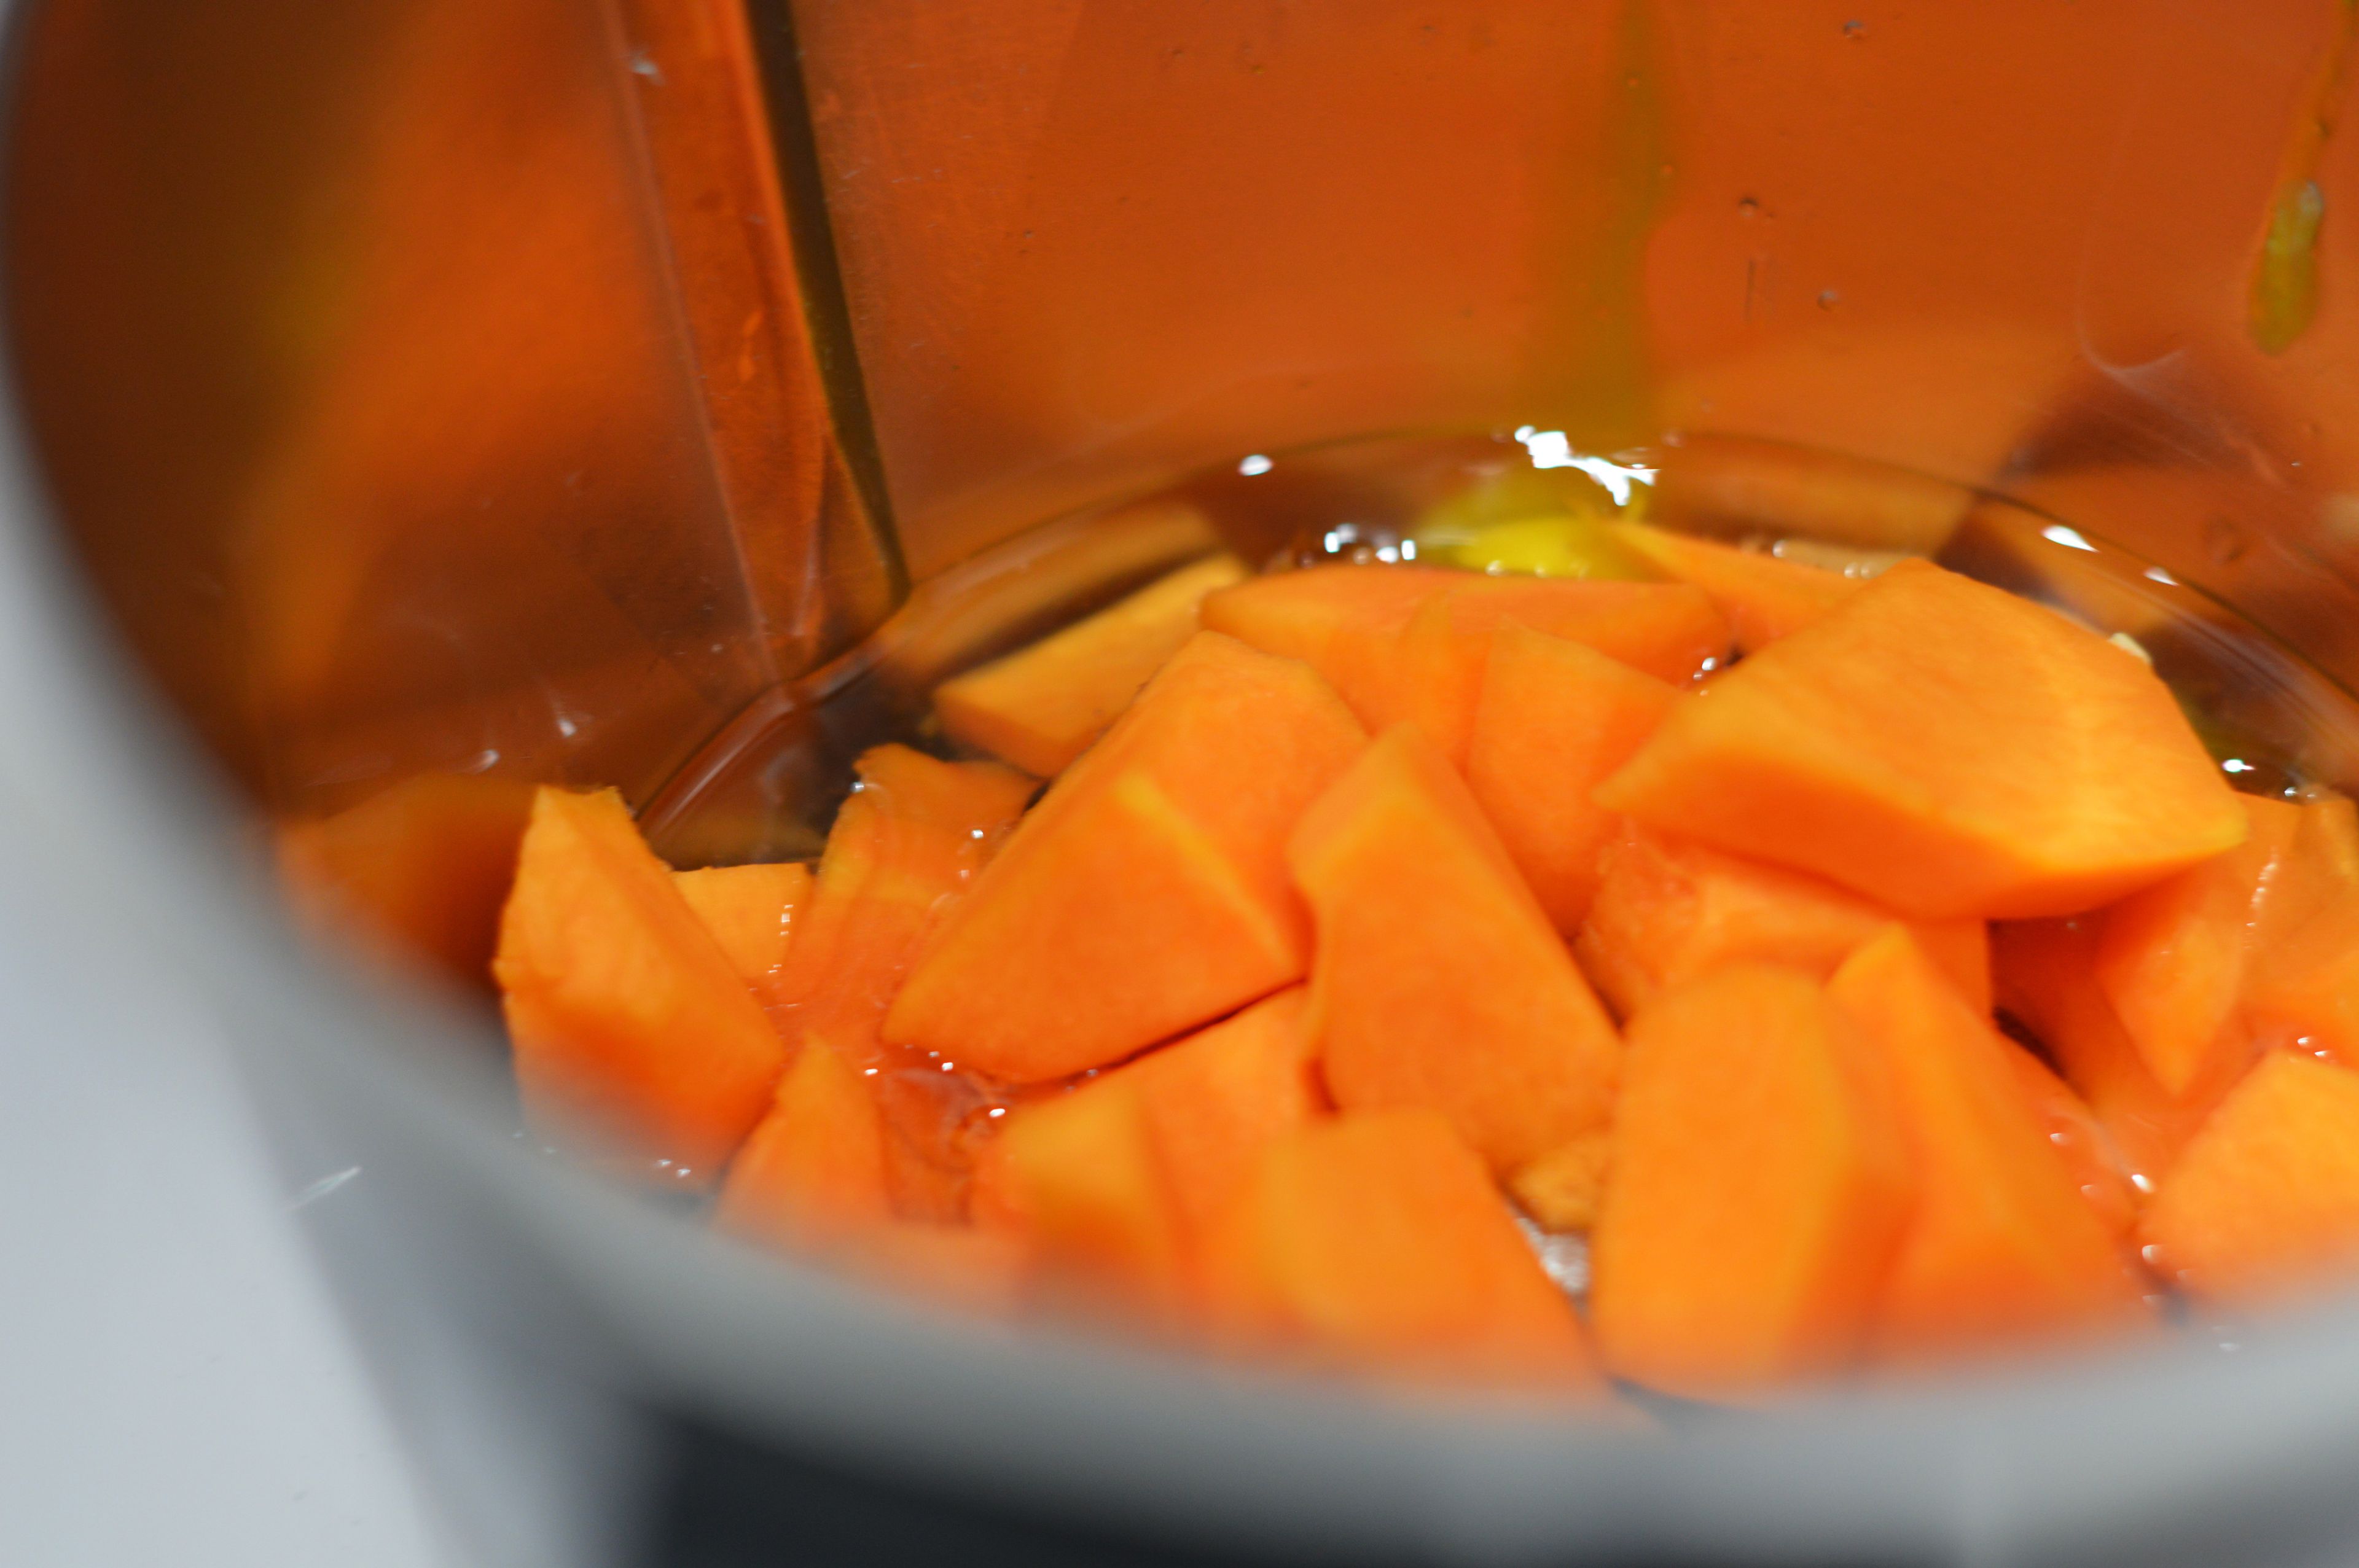 In a blender, mix the eggs, sugar, oil and pumpkin cubes. Grind well until liquid.